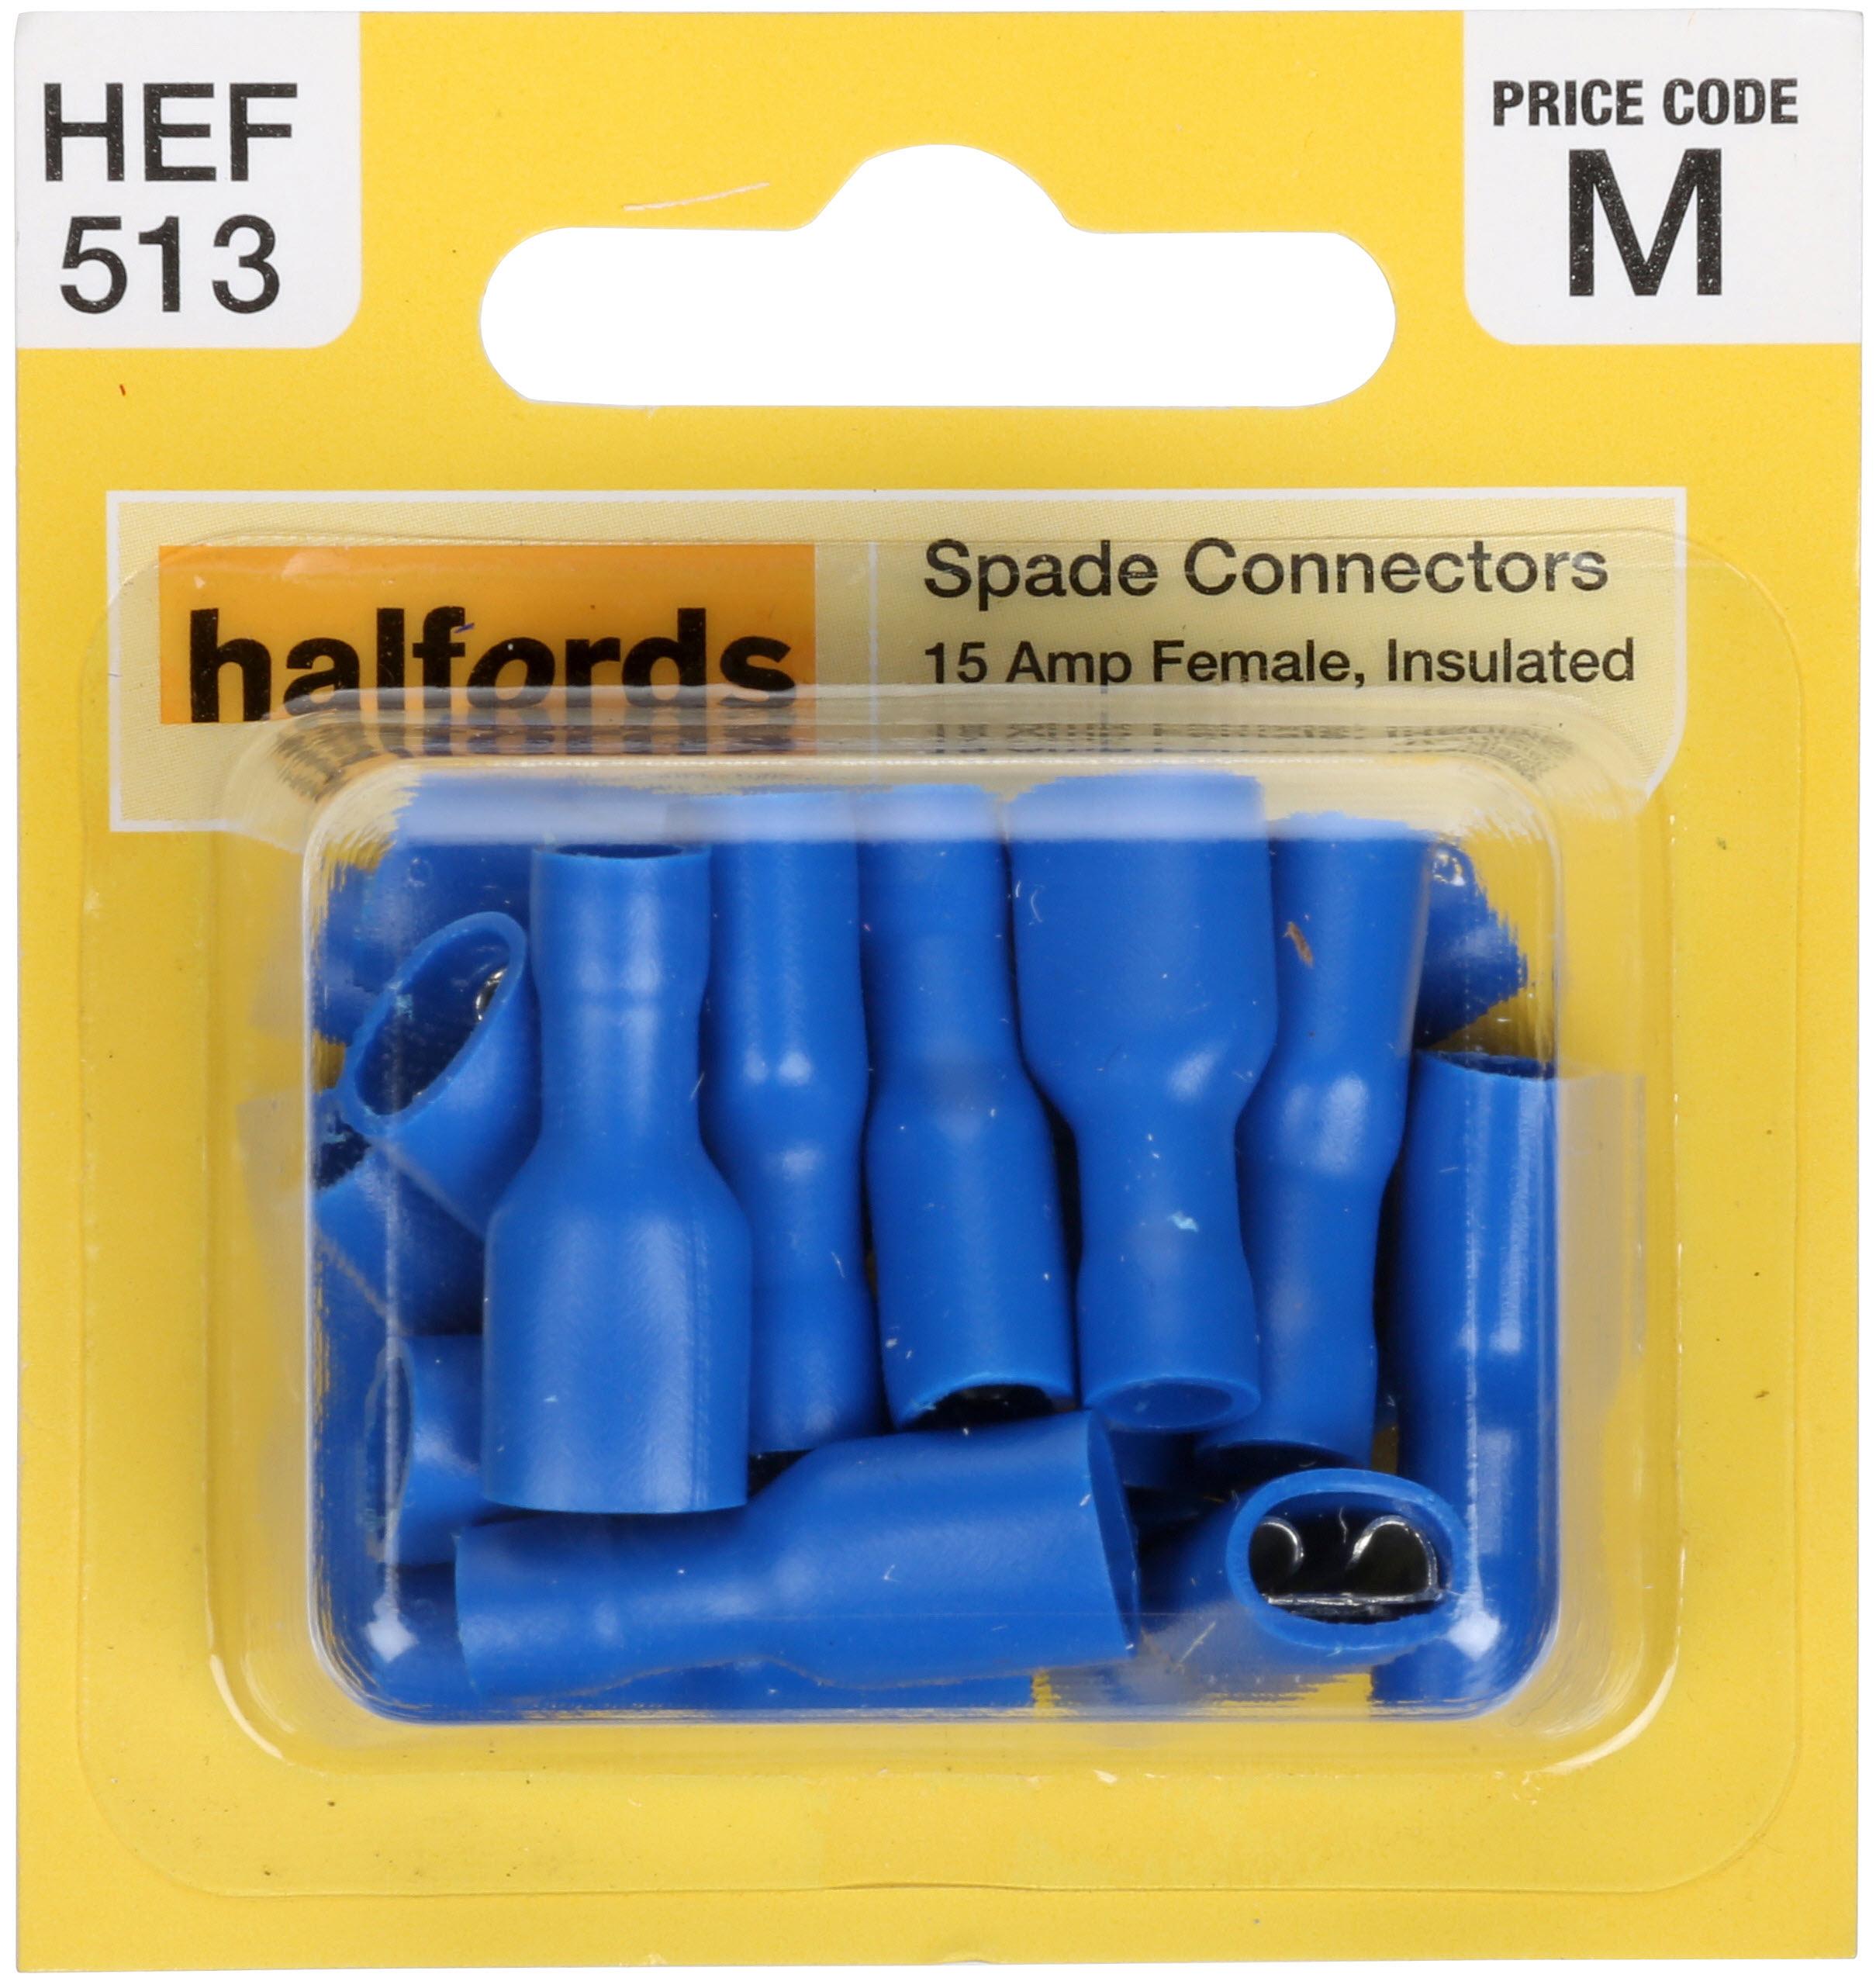 Halfords Spade Connectors (Hef513) 15 Amp/Female